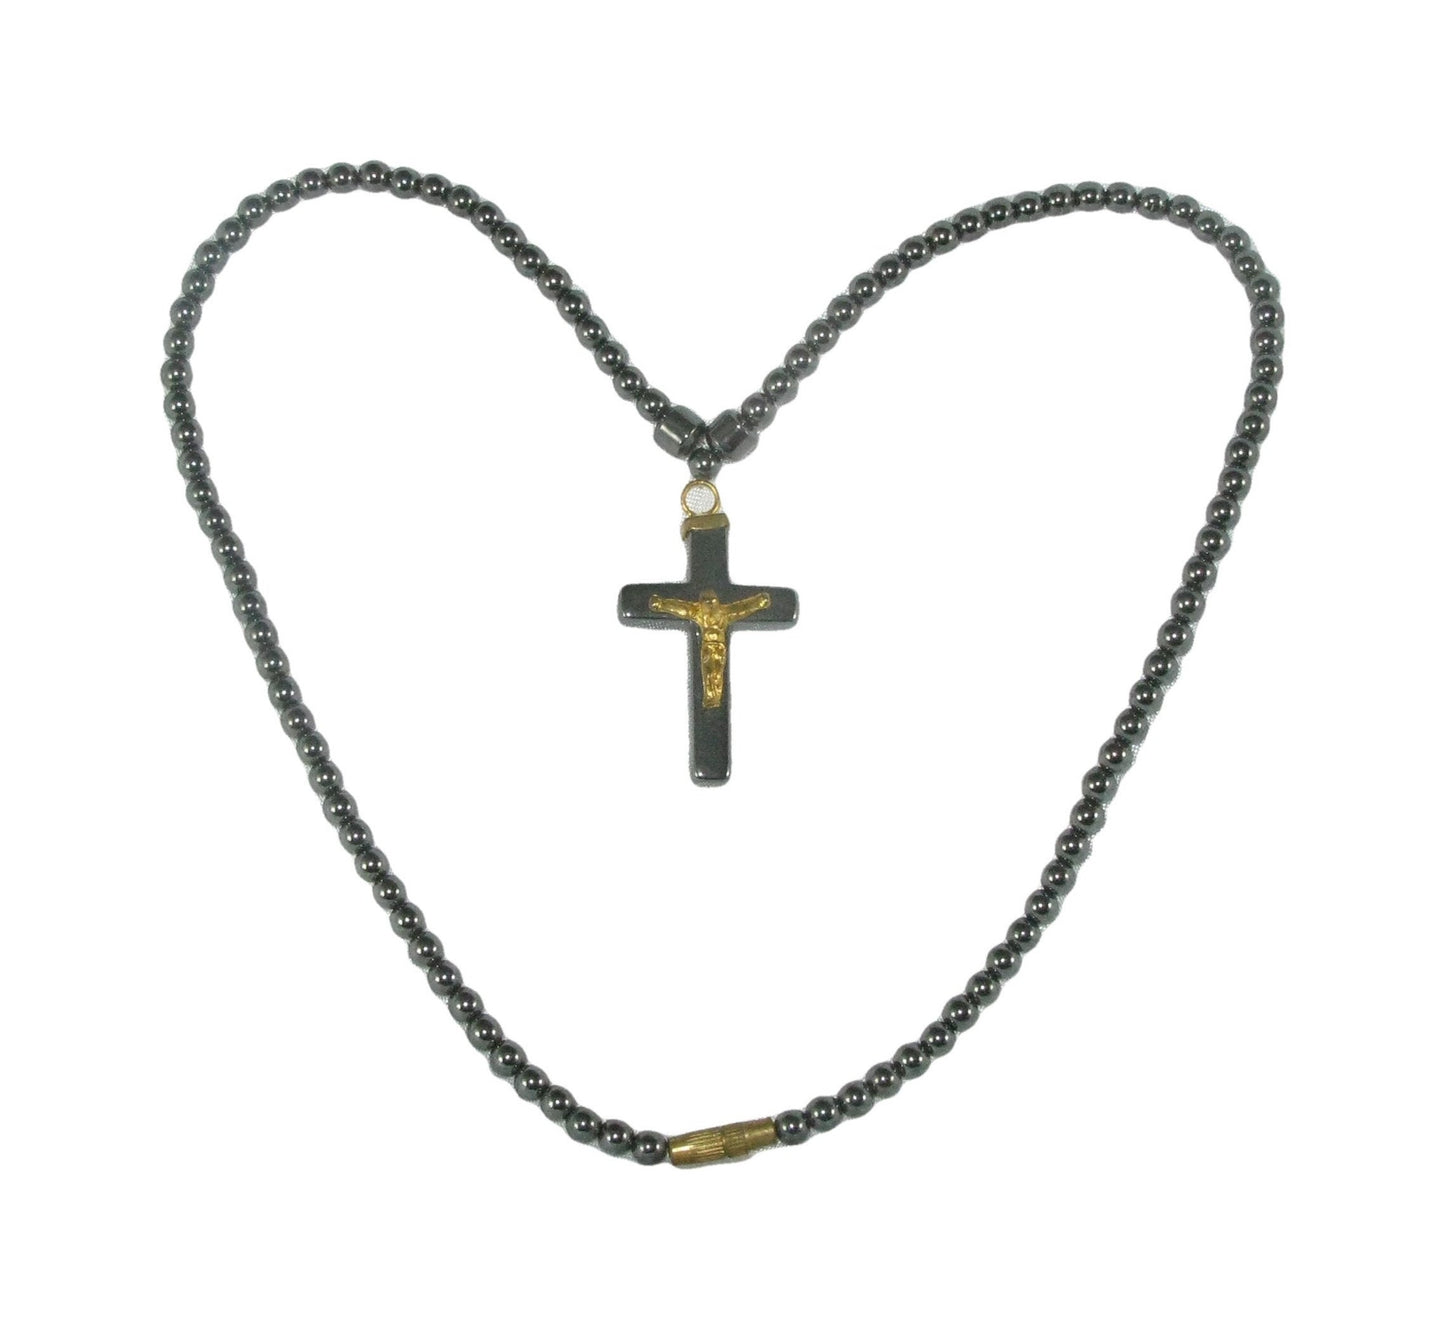 Hematite Healing Energy Anti-Stress Necklace 18" / 45 cm Crucifix Pendant Handmade + Presentation Pouch & Storycard